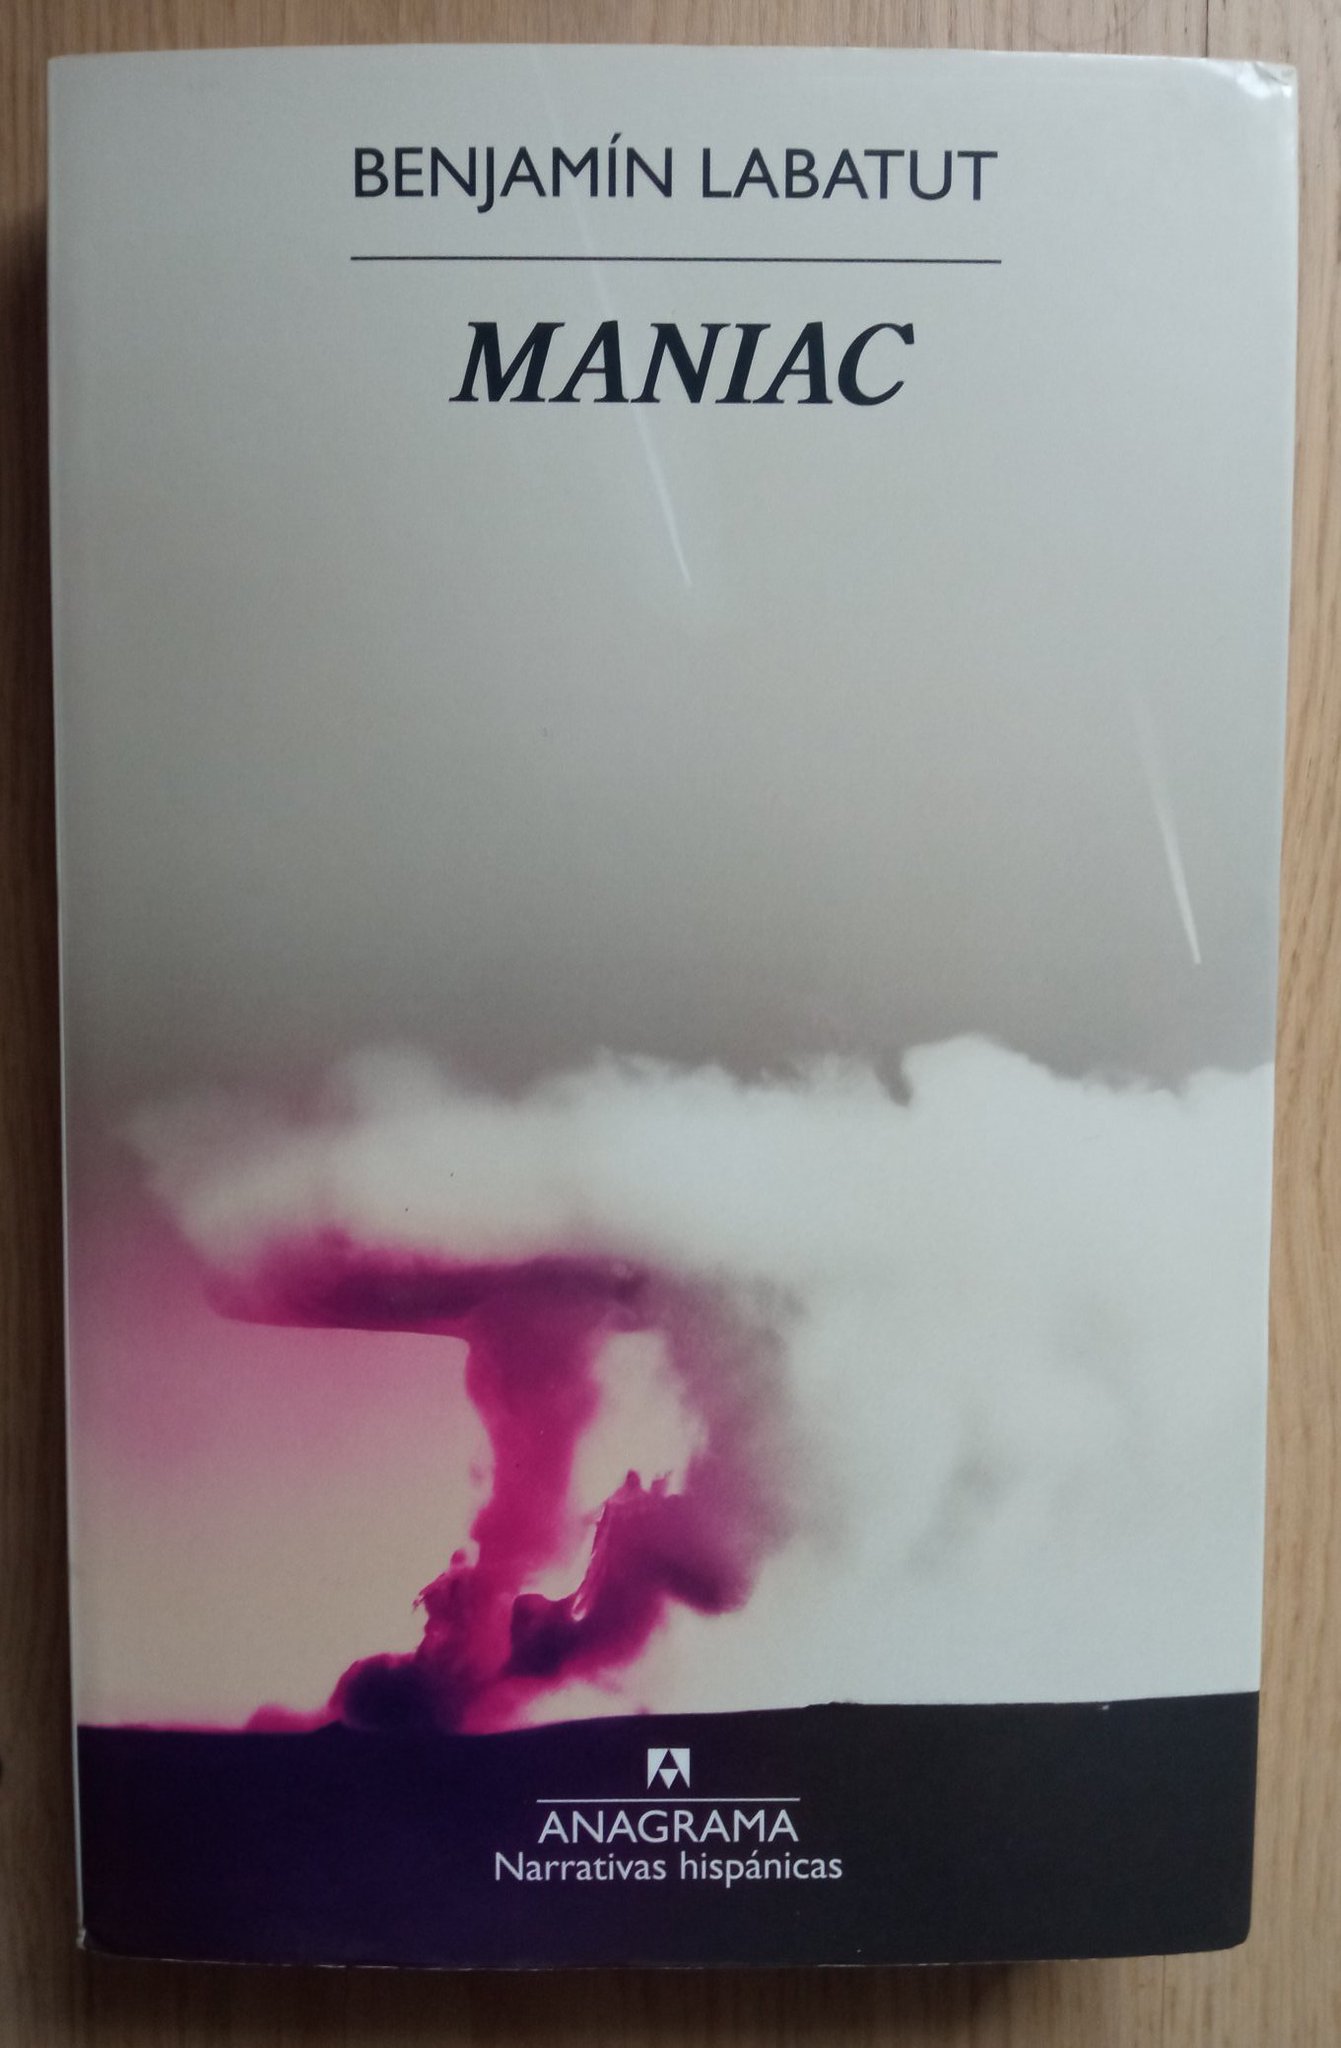 MANIAC - Labatut, Benjamín - 978-84-339-1100-1 - Editorial Anagrama